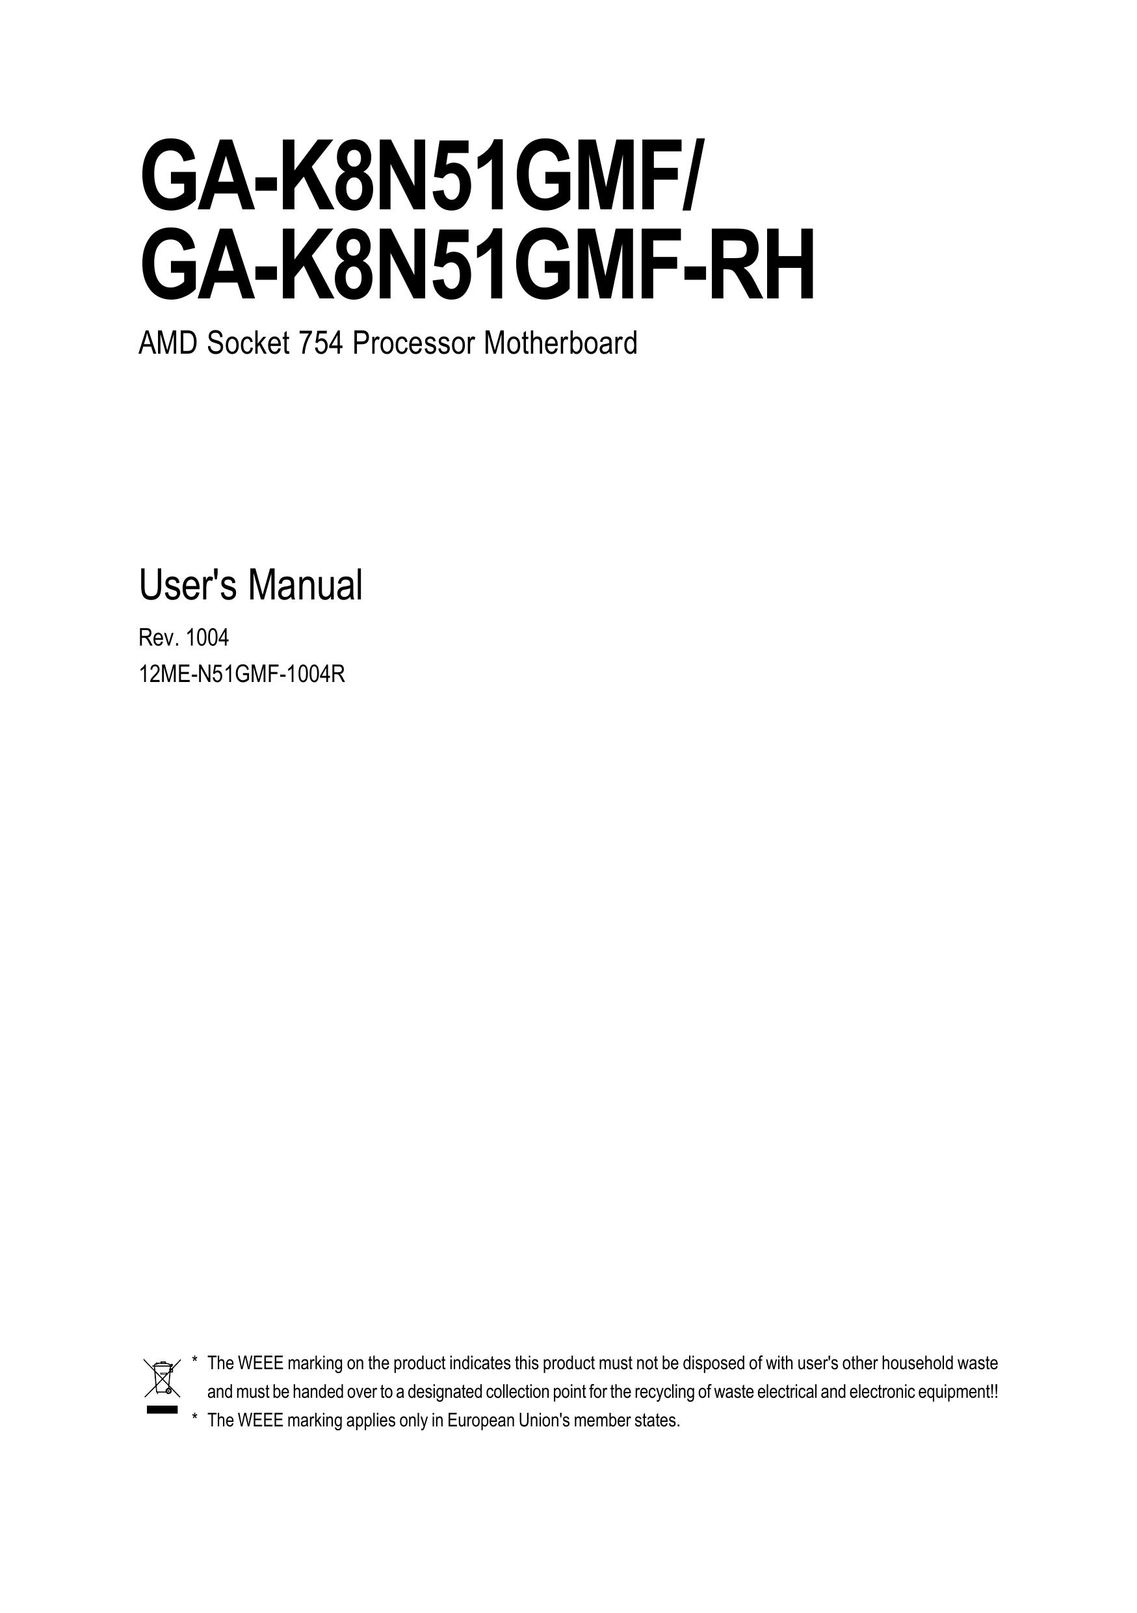 AMD GA-K8N51GMF-RH Computer Hardware User Manual